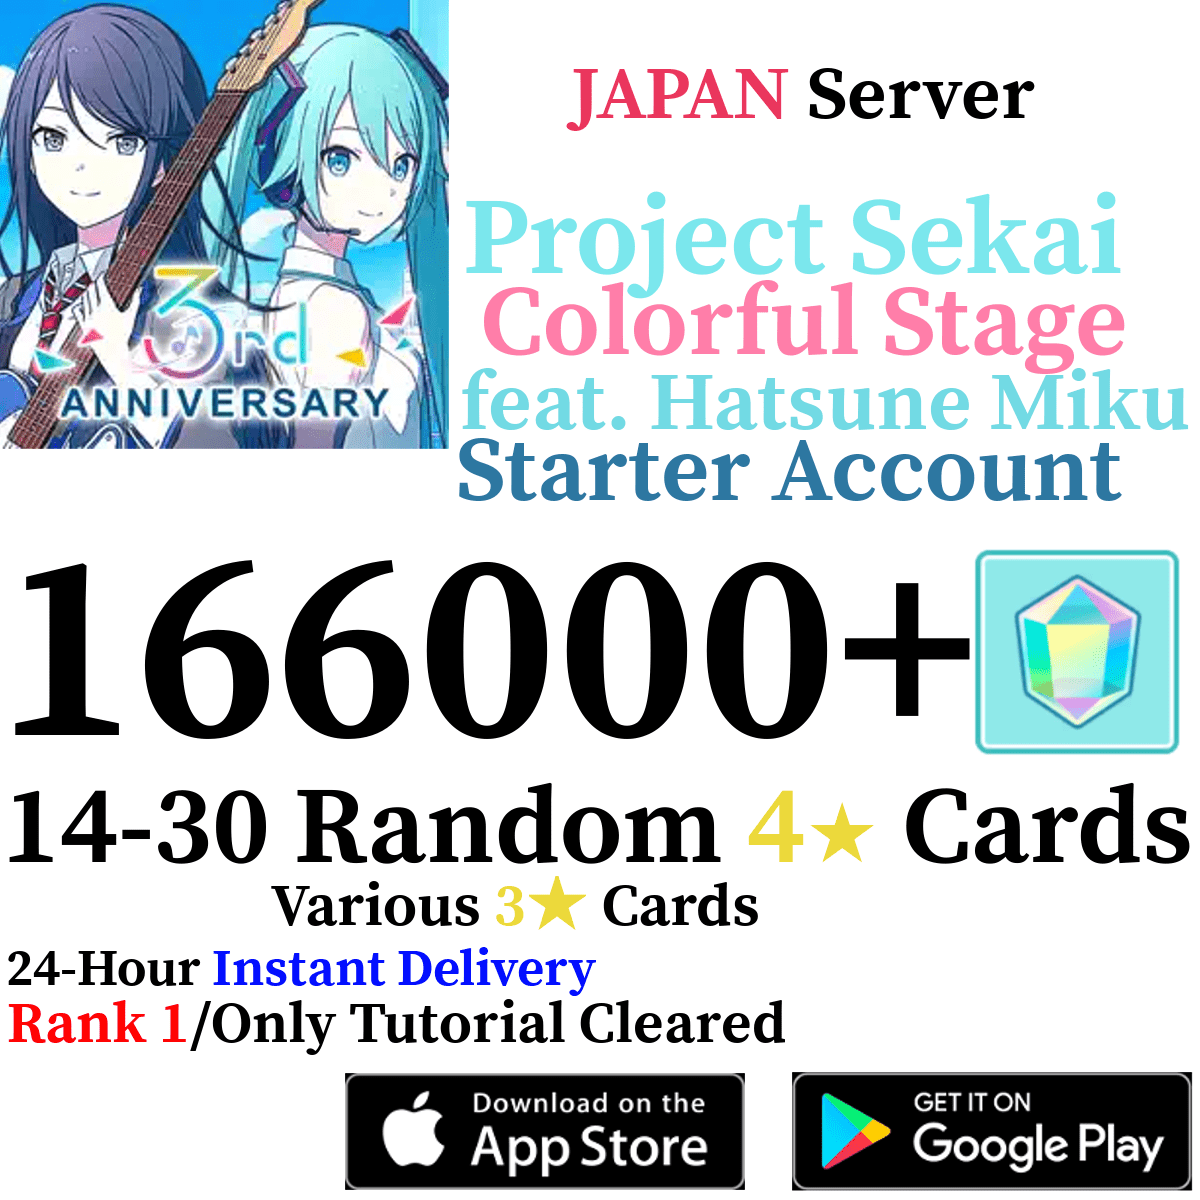 [JP] [INSTANT] 166000+ Gems Project Sekai Colorful Stage ft Hatsune Miku PJSekai Reroll Account - Skye1204 Gaming Shop